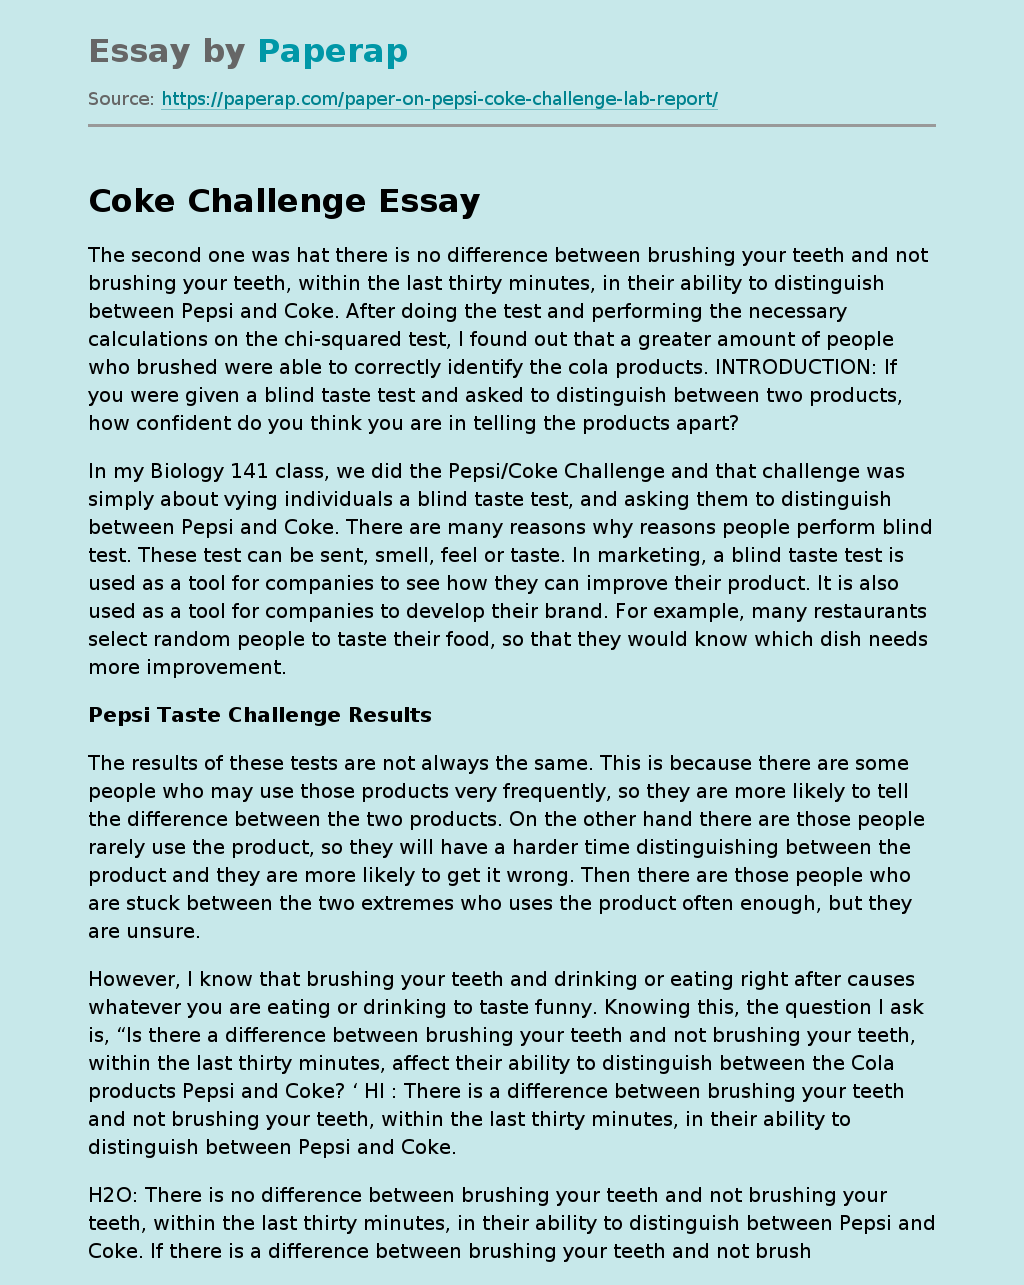 Pepsi Taste Challenge Results